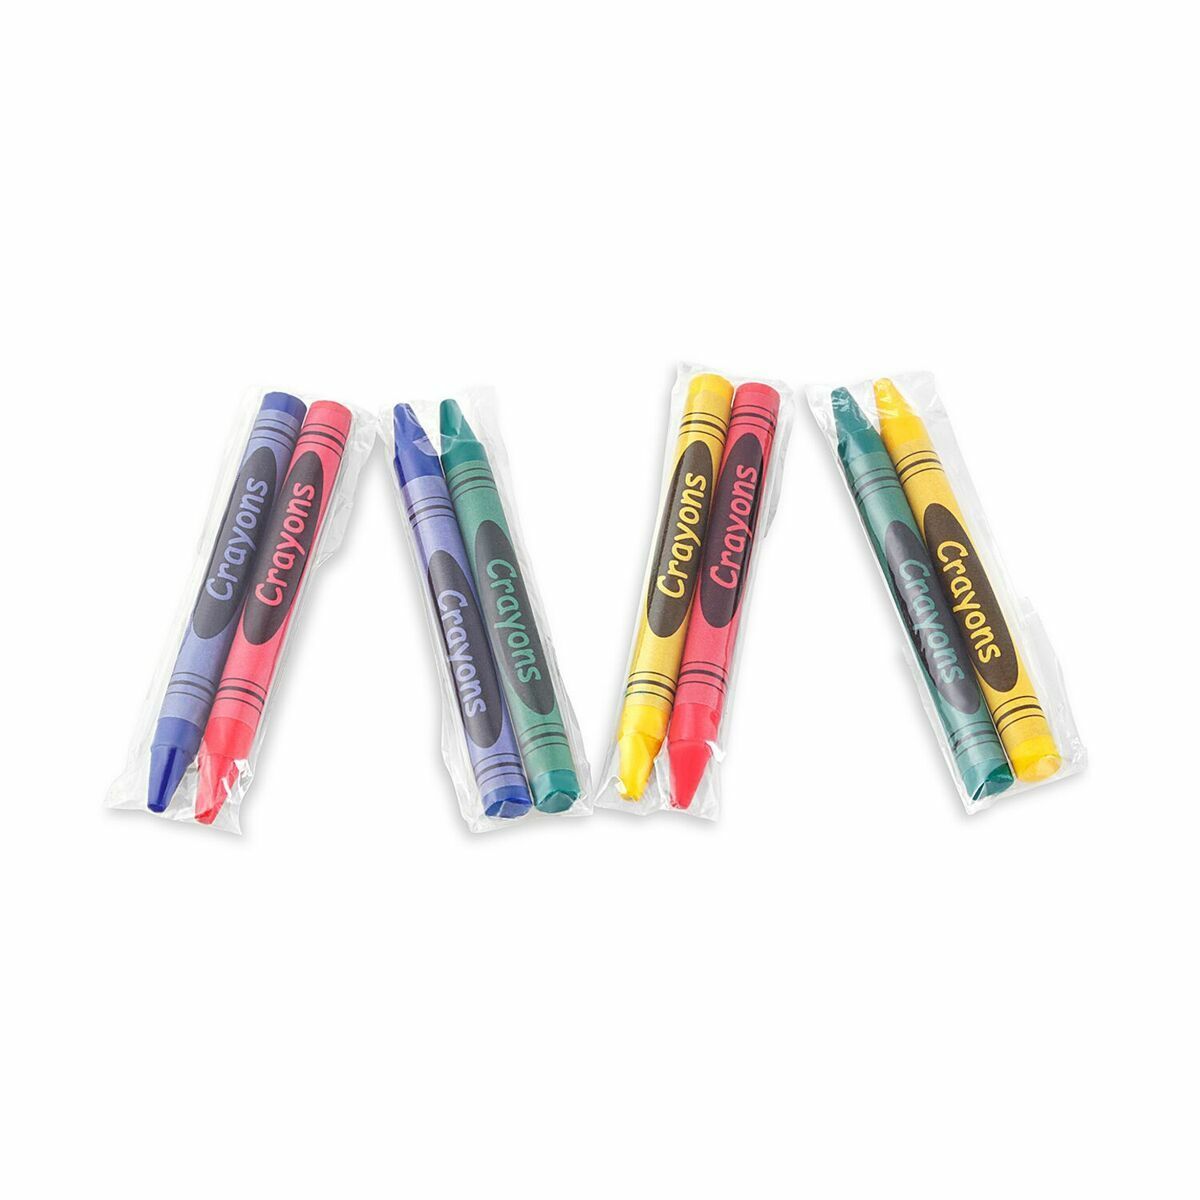 Crayonking 1,000 Sets Of 2-packs In Cello (2,000 Bulk Crayons) Coloring Crayons